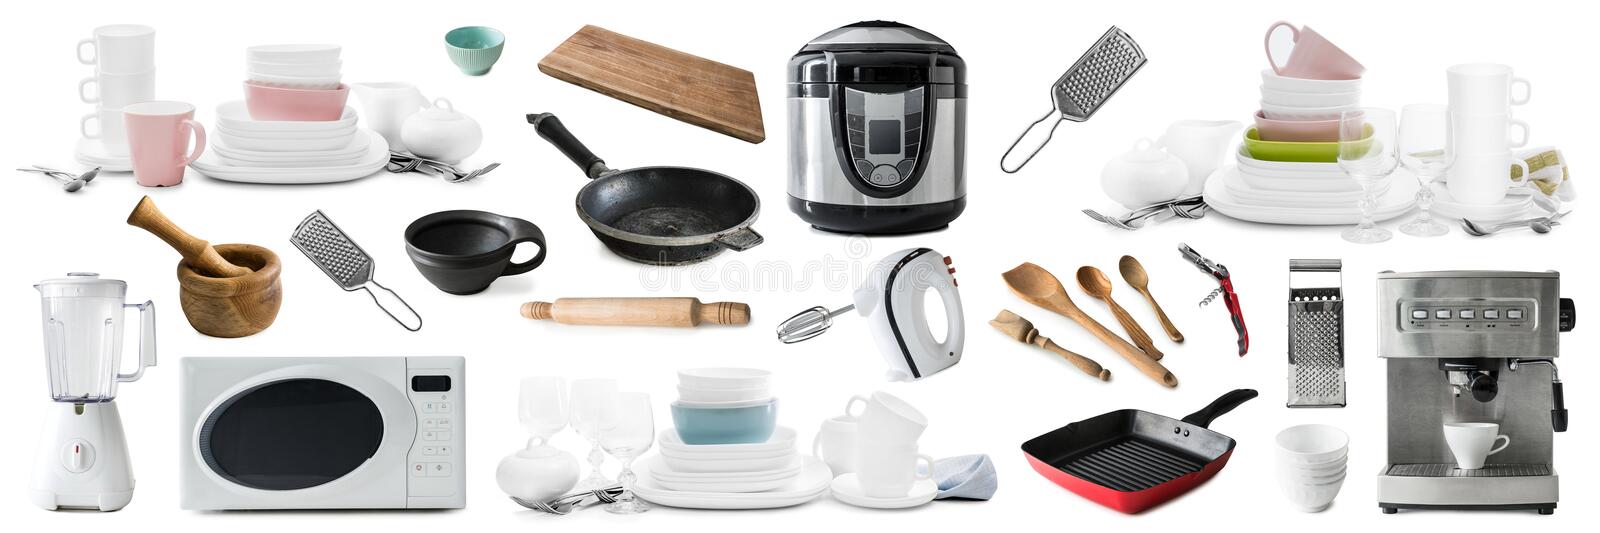 major kitchen appliances